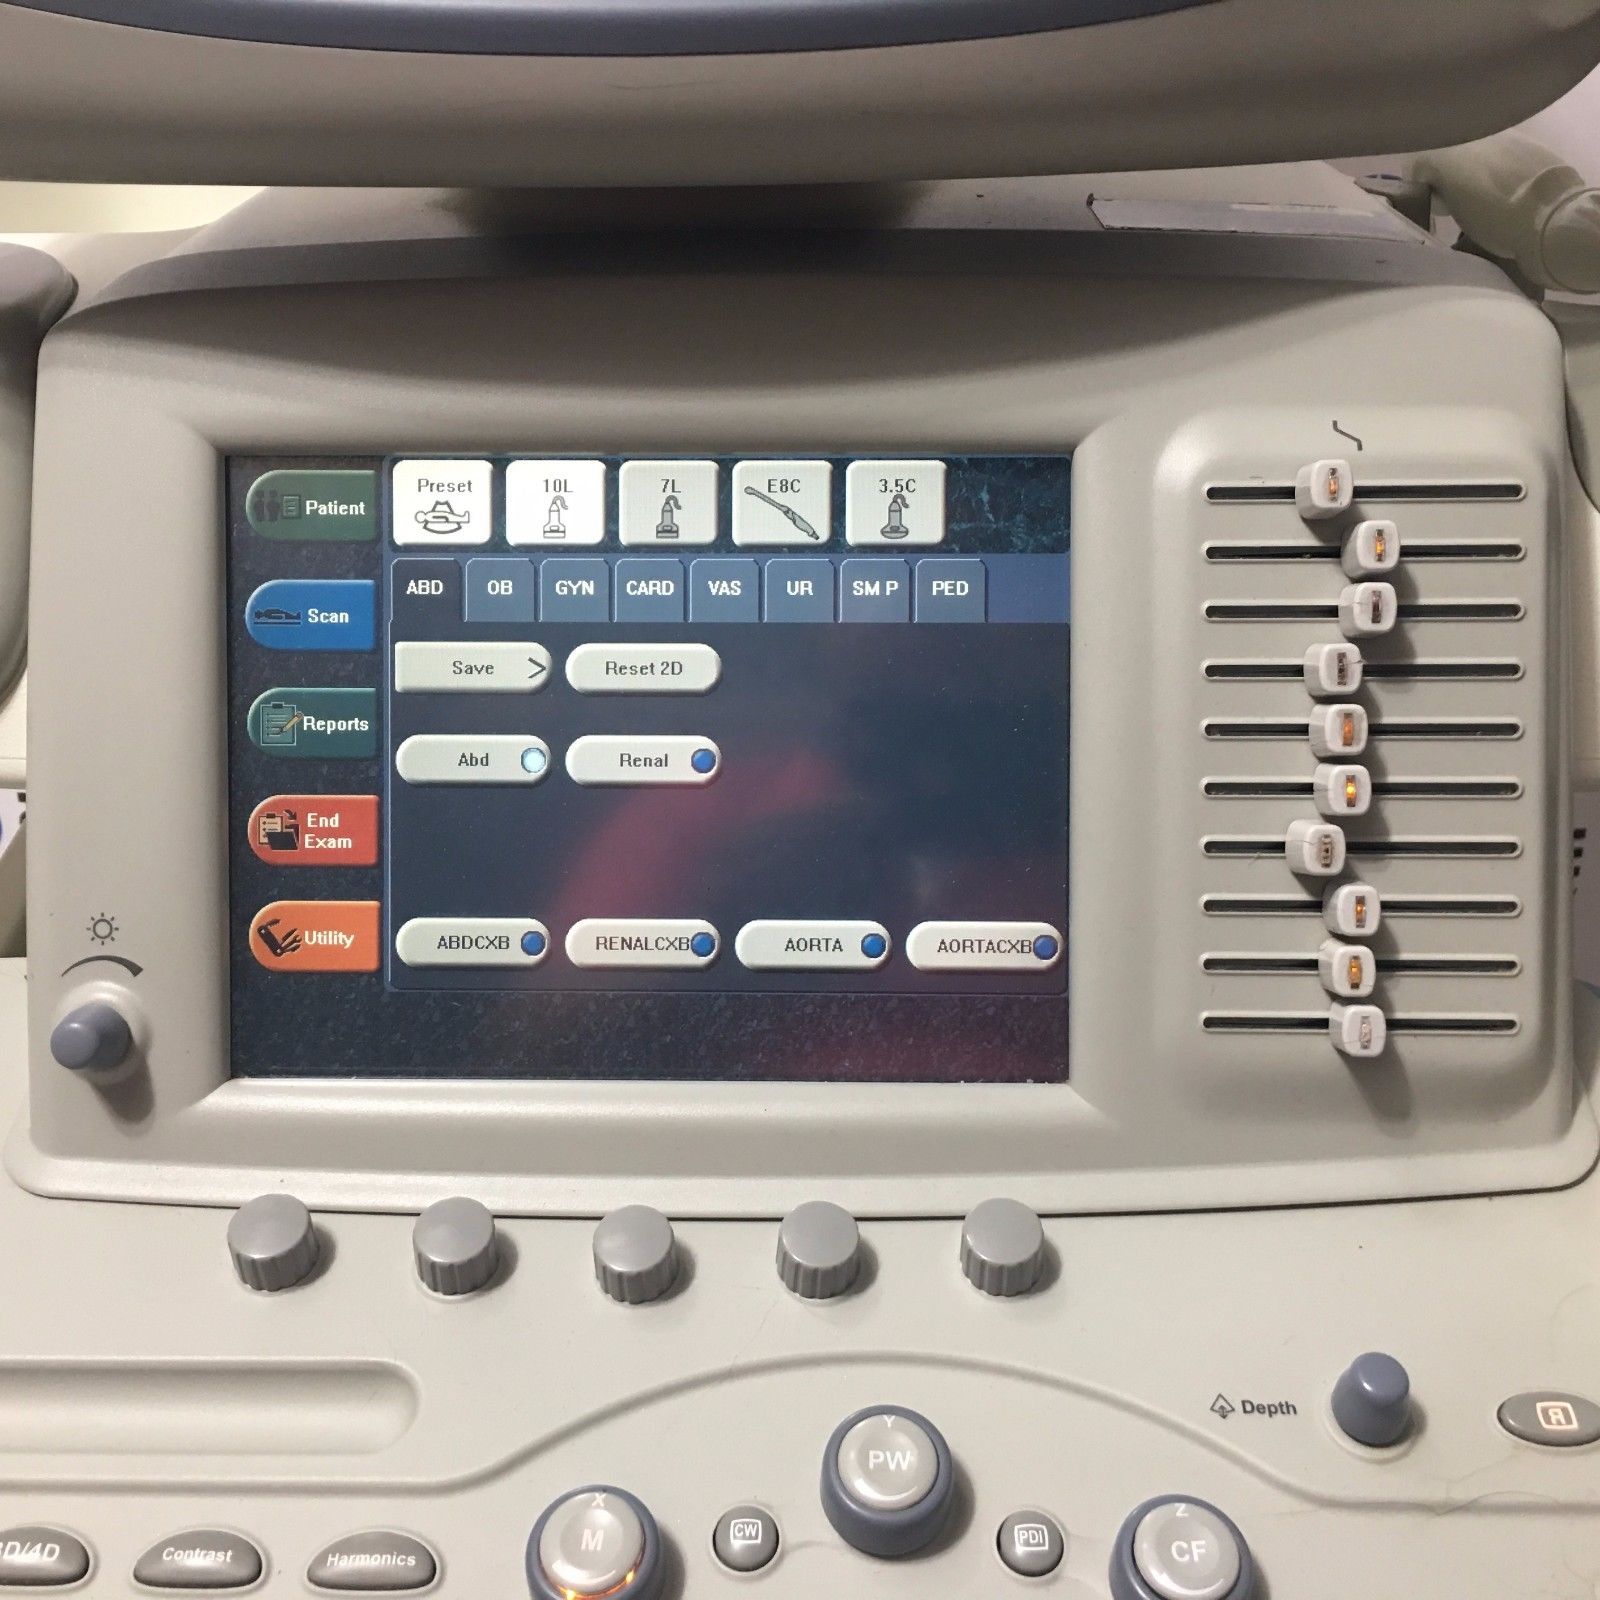 GE Logiq 9 Ultrasound System with 3.5C, E8C, 7L, 10L, and M12L  Transducers